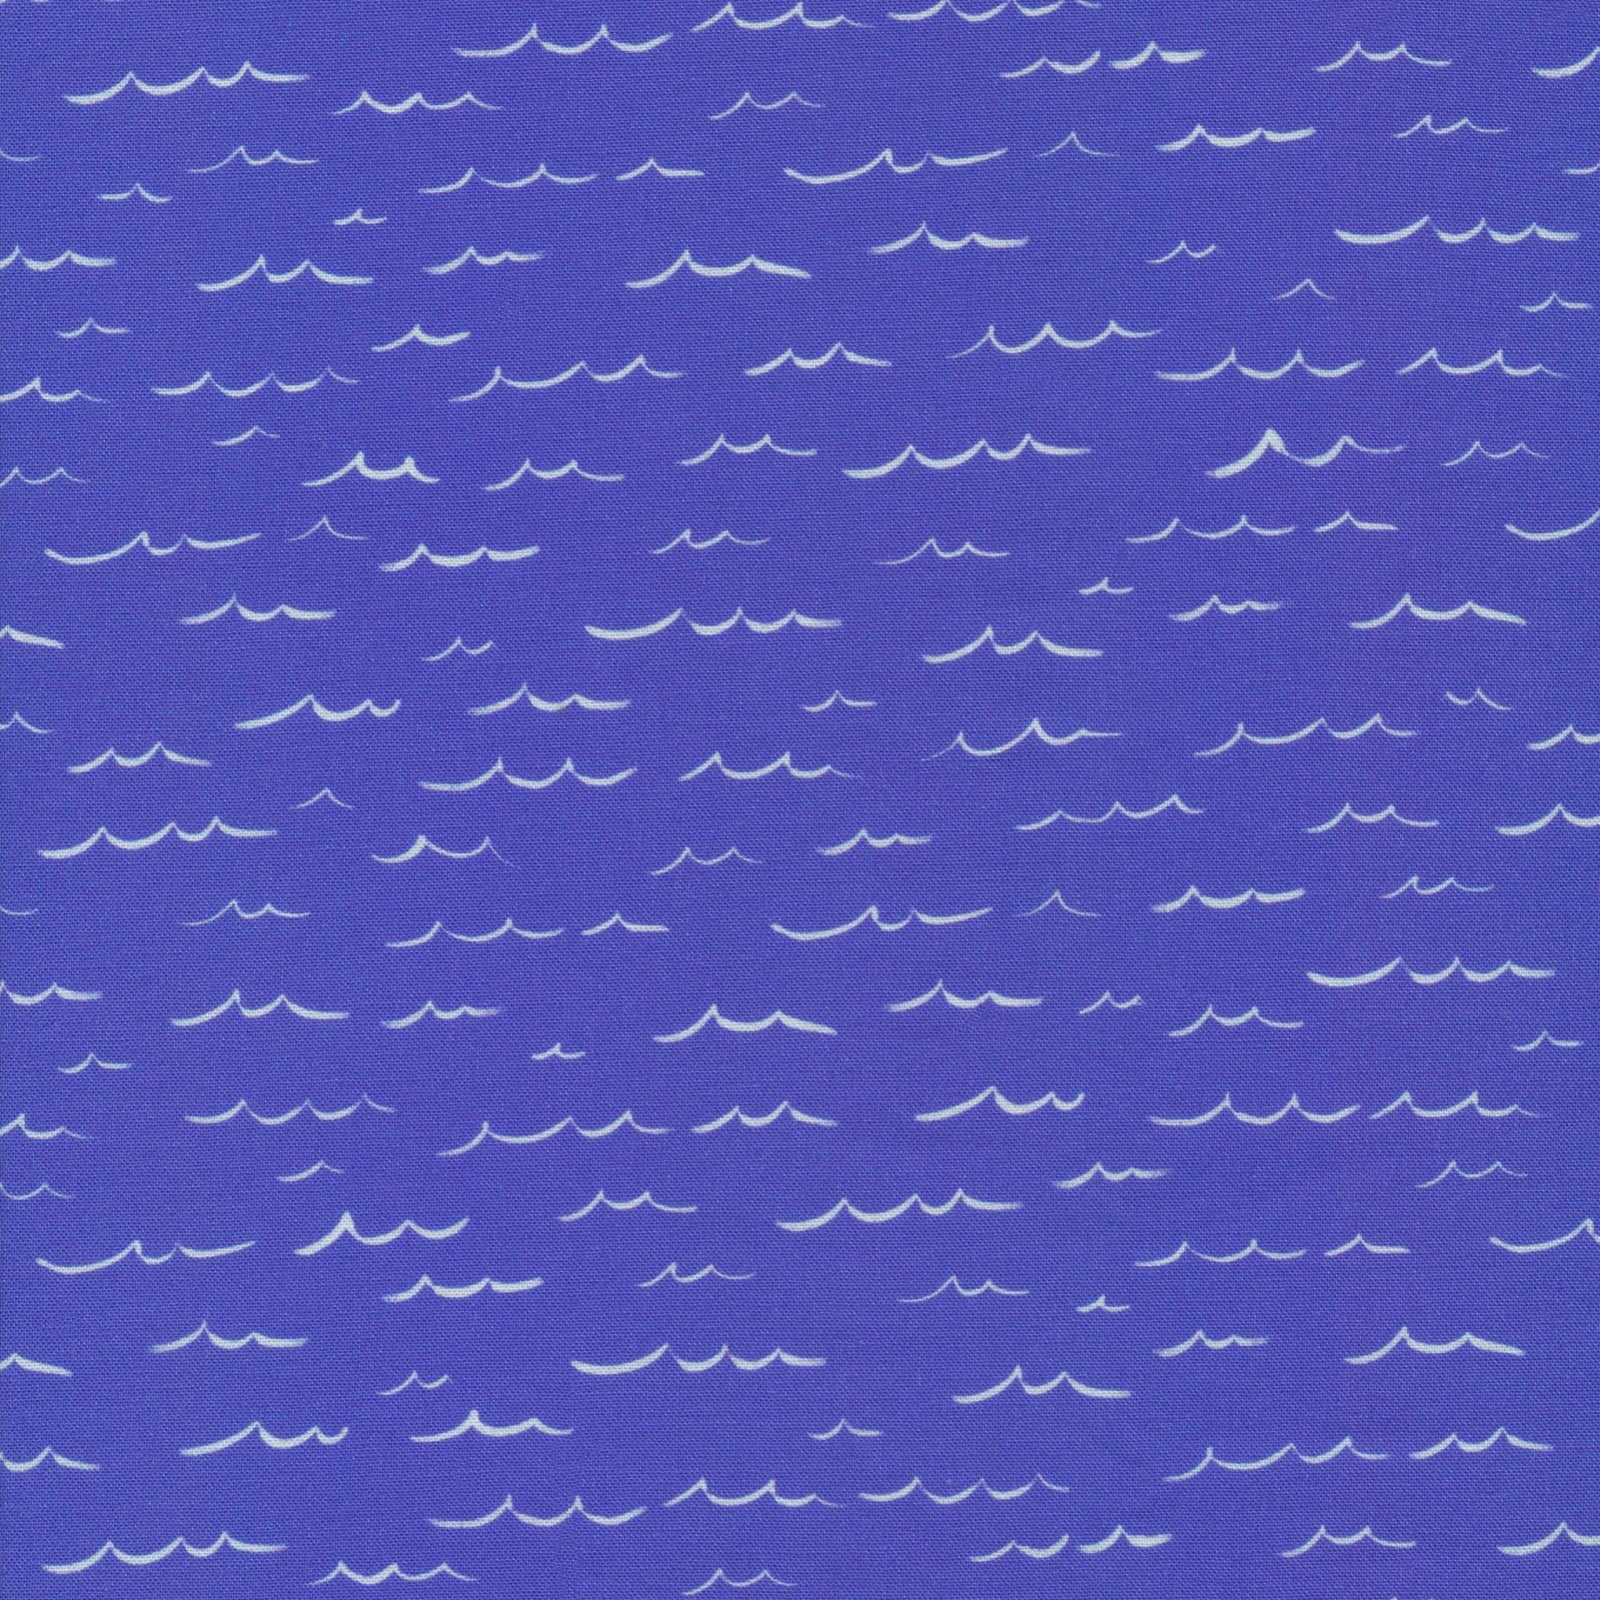 Dog Days of Summer Quilt Fabrics - Wavy Days Waves in Blue - 277414